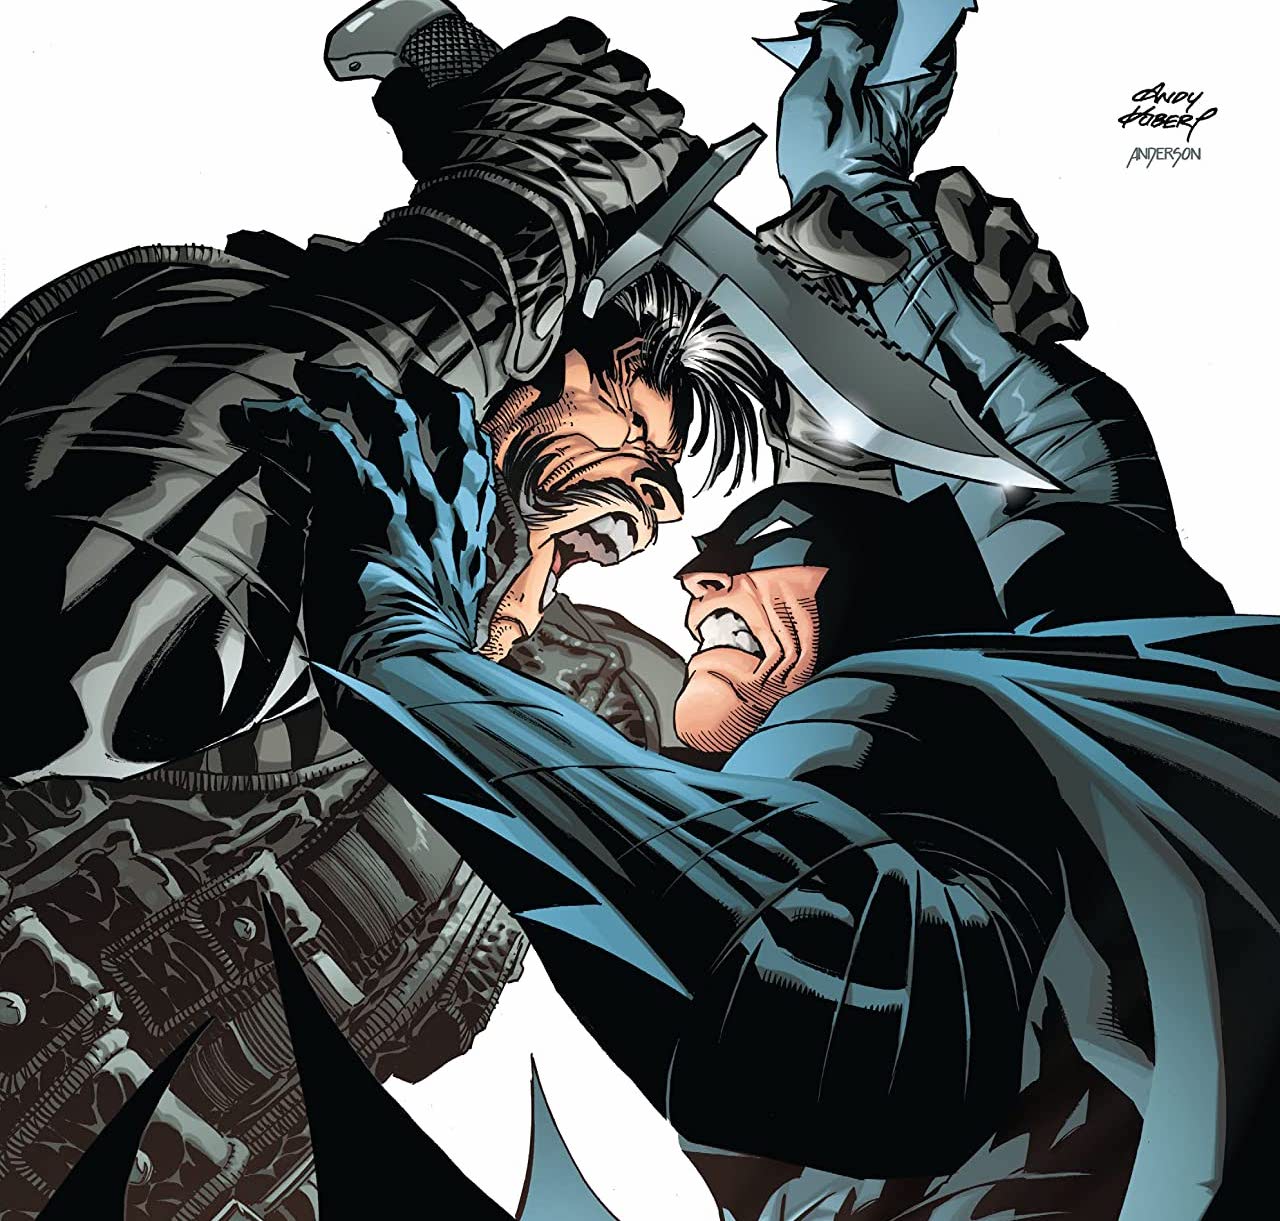 'Batman: The Detective' #3 reveals how Bruce Wayne learned manhunting